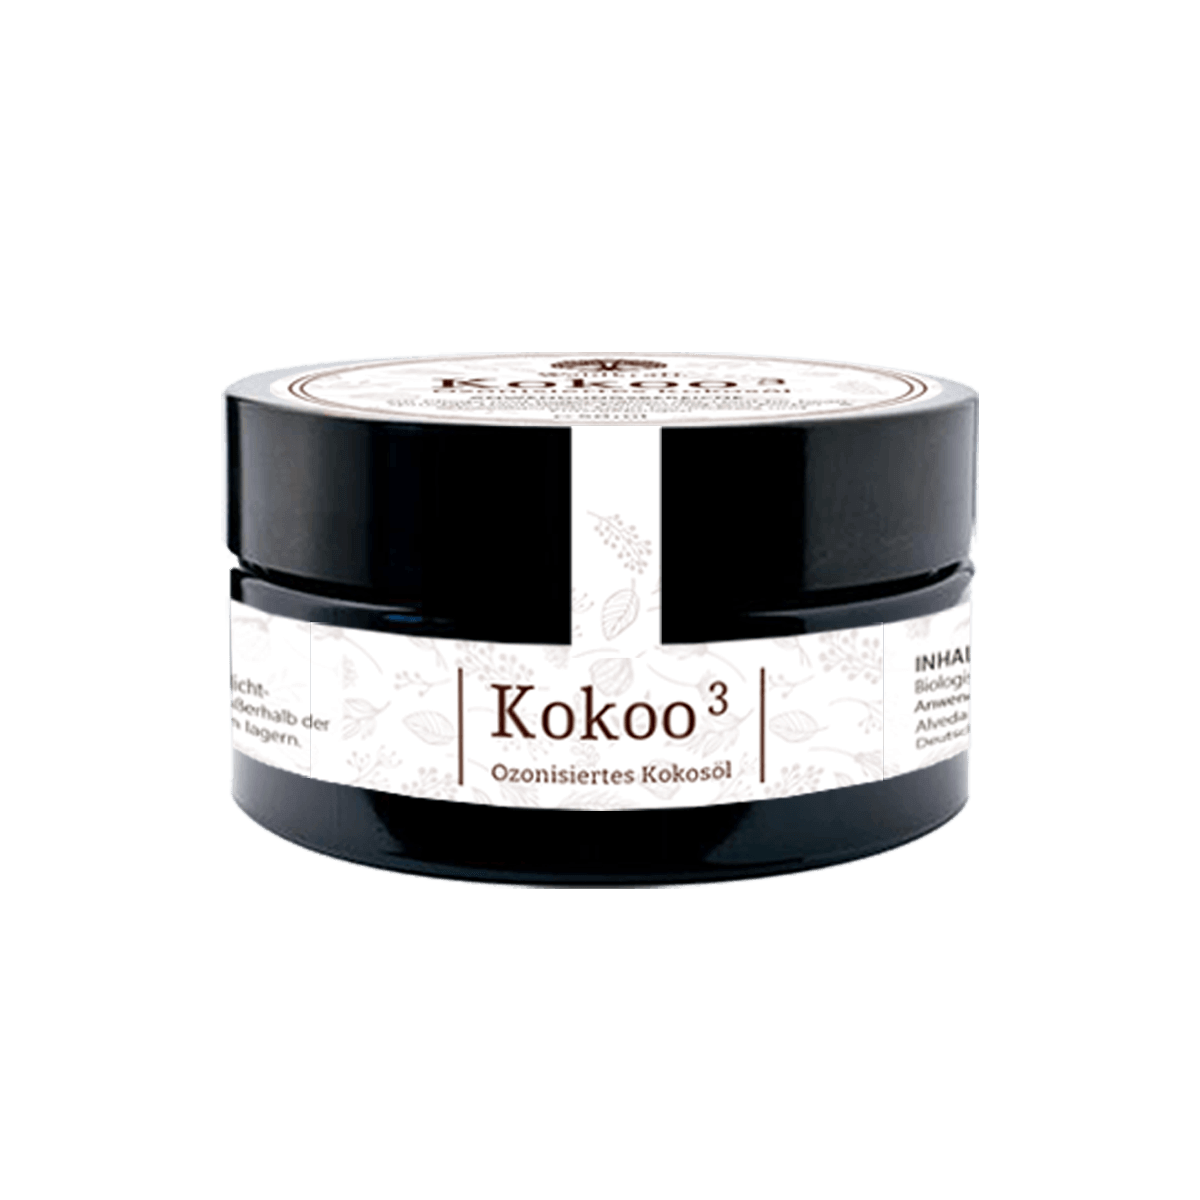 Kokoo3 – Ozonisiertes Kokosöl 30 ml